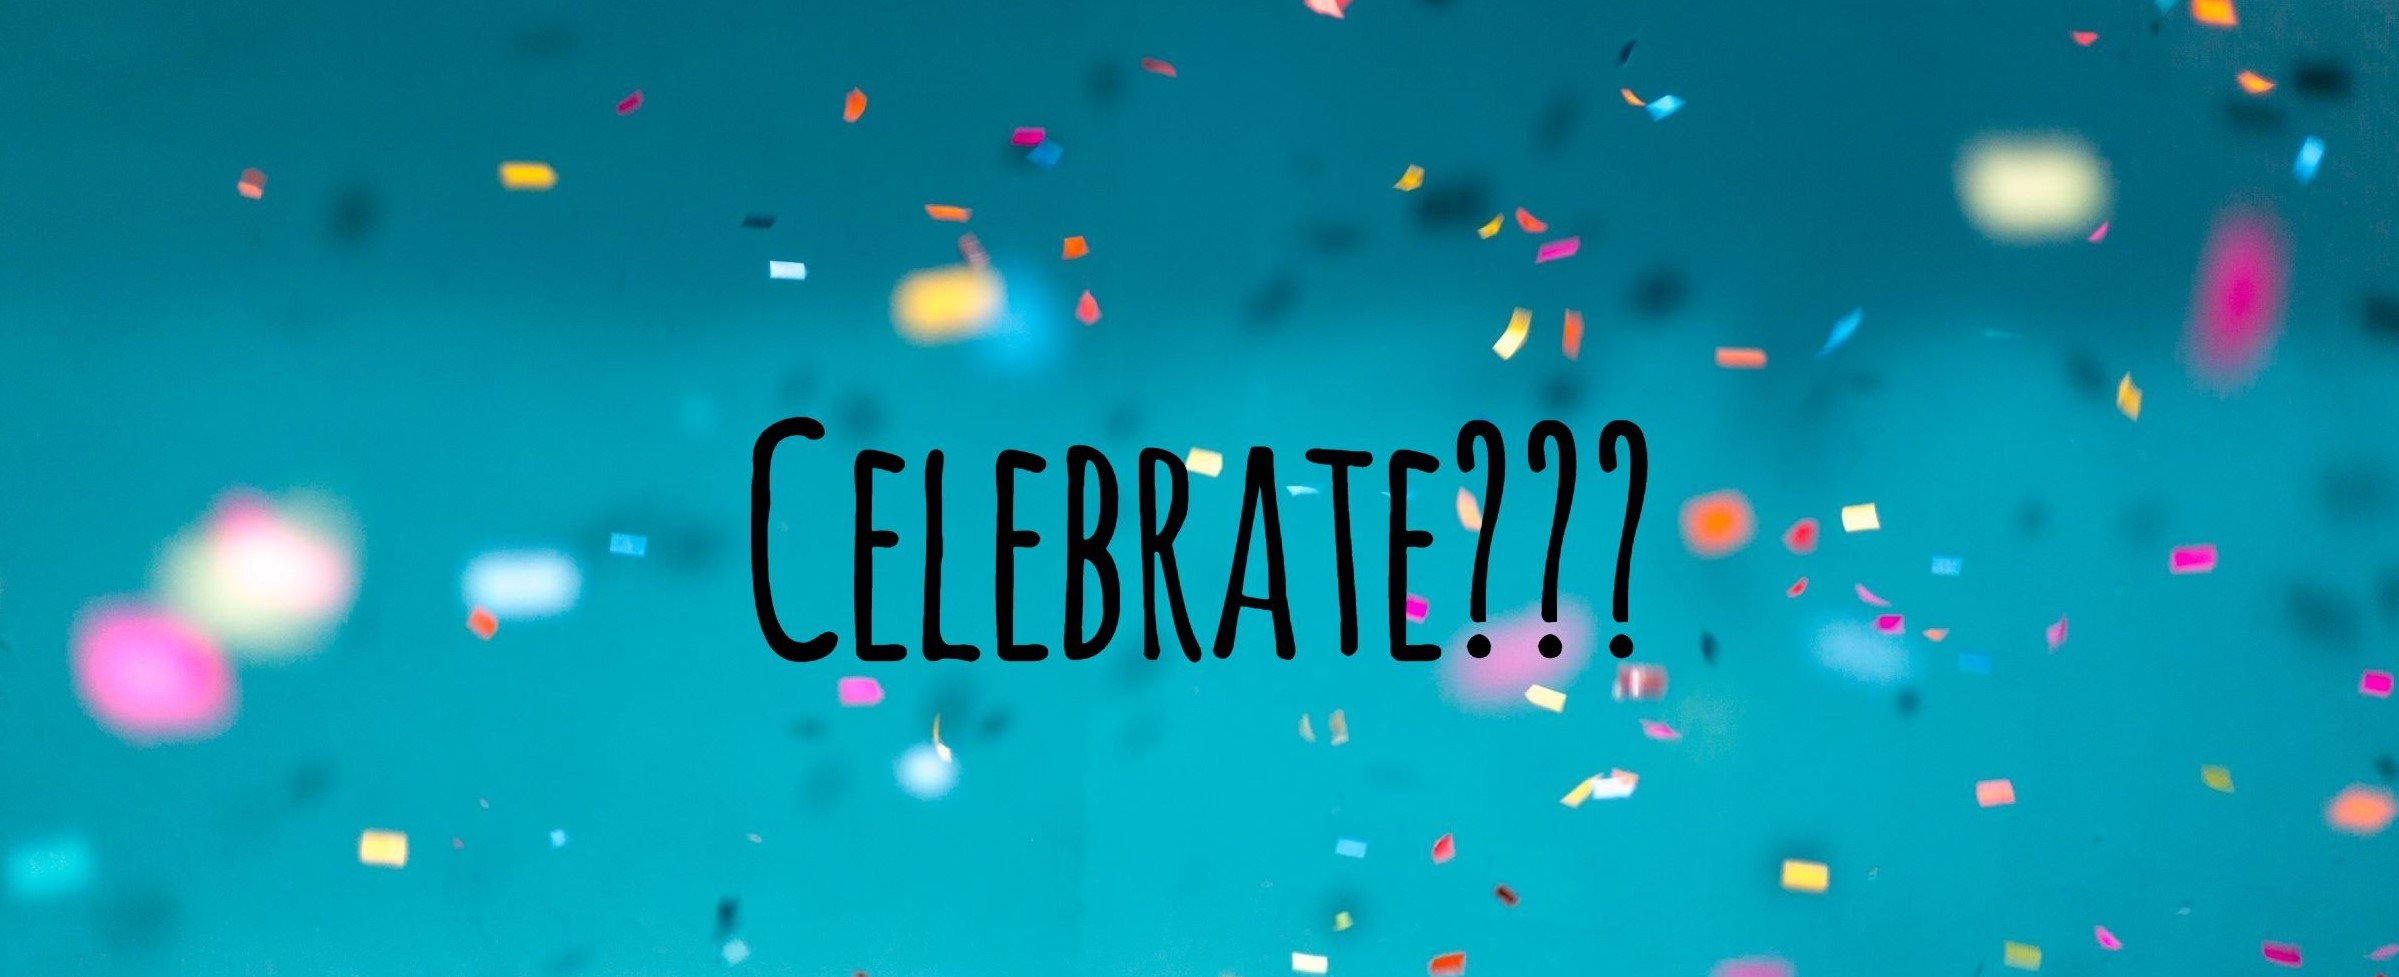 Celebrate?